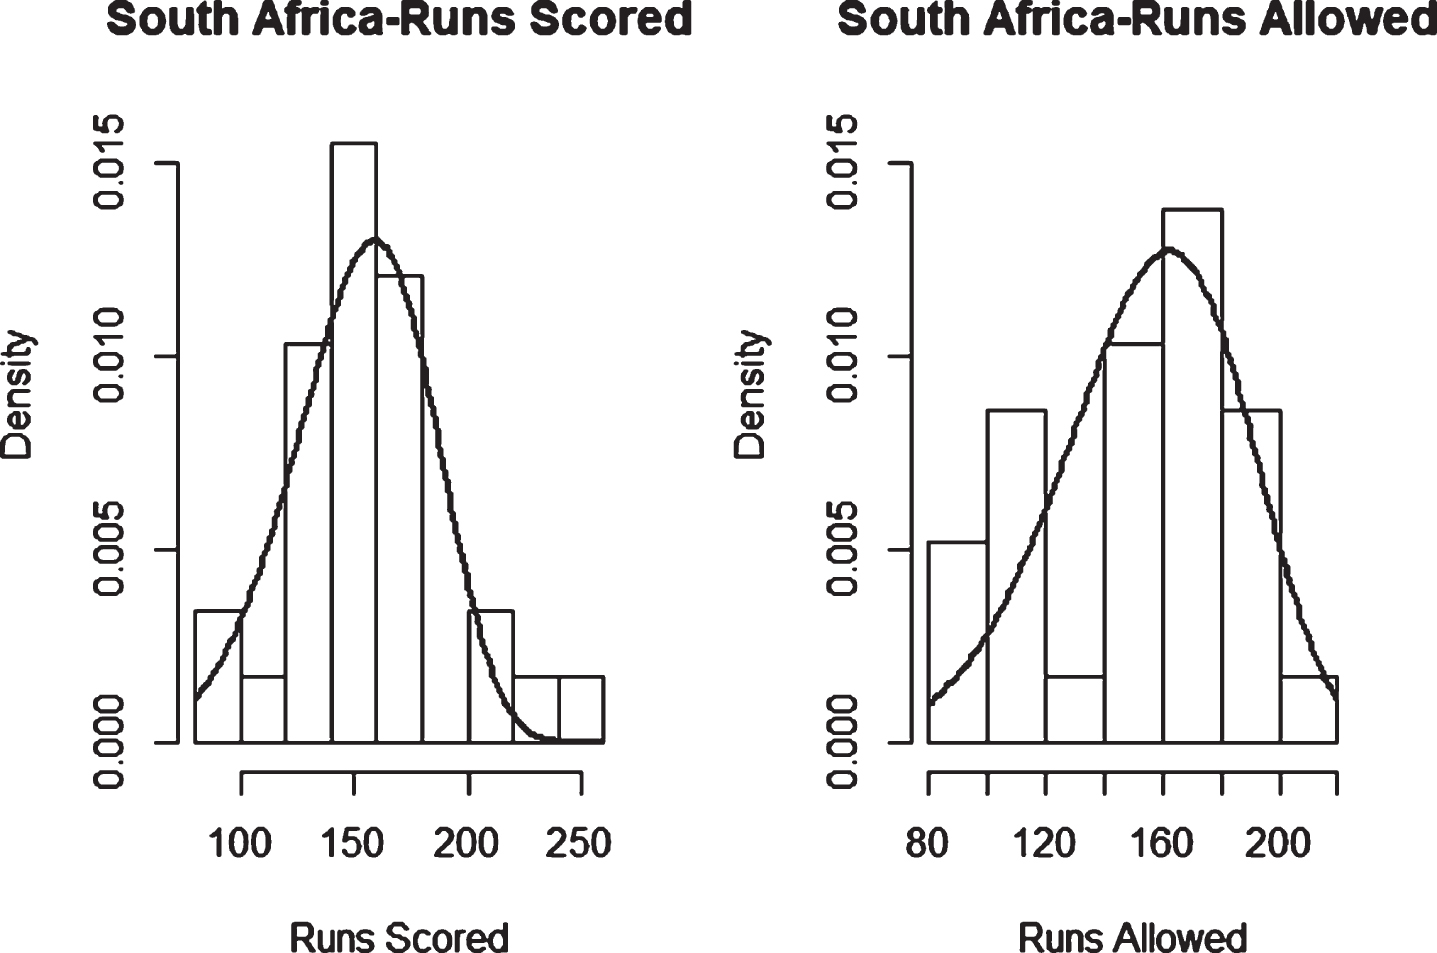 Weibull Distribution Fit for Runs Scored and Runs Allowed for South Africa using Maximum Likelihood Method (Twenty20).